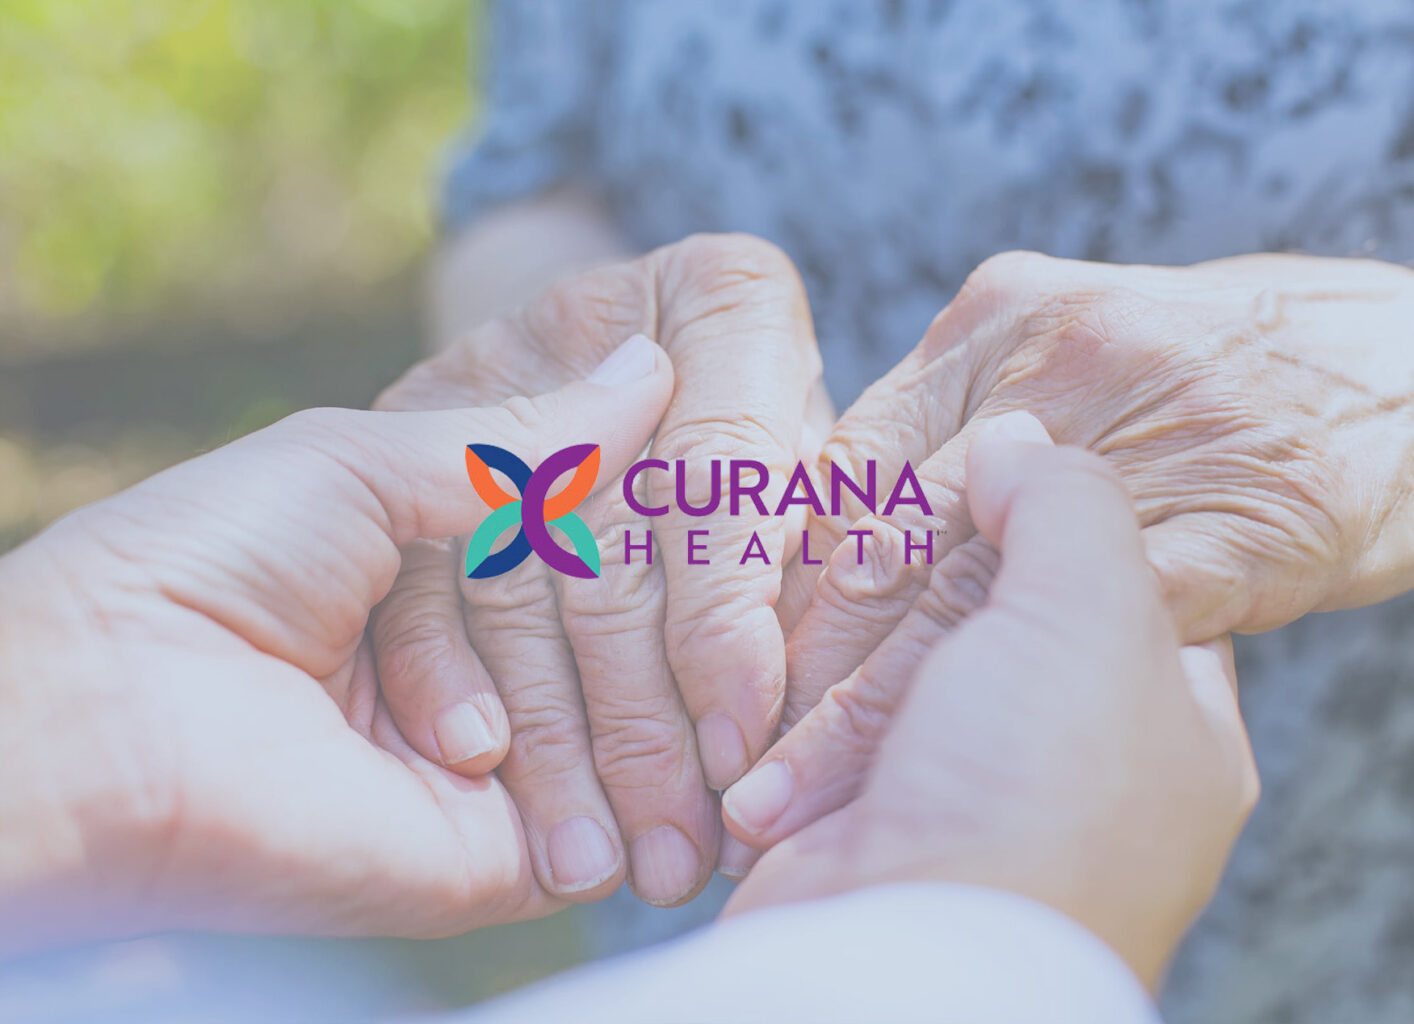 Curana Health logo and holding hands